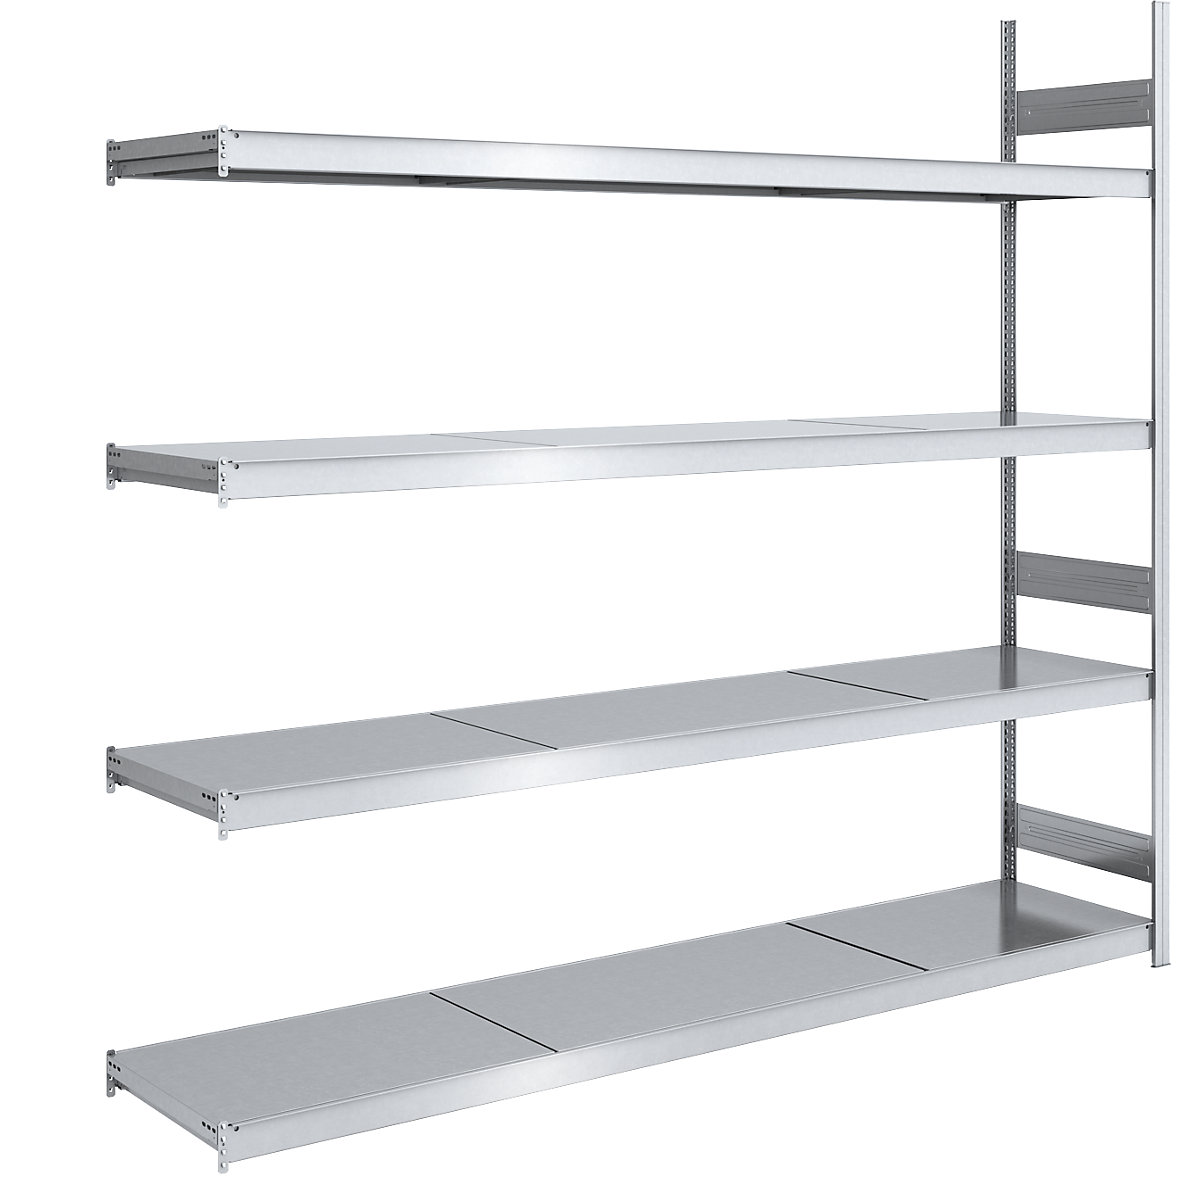 Wide span boltless shelving unit with steel shelves – hofe, height 2500 mm, shelf width 2500 mm, shelf depth 600 mm, extension shelf unit